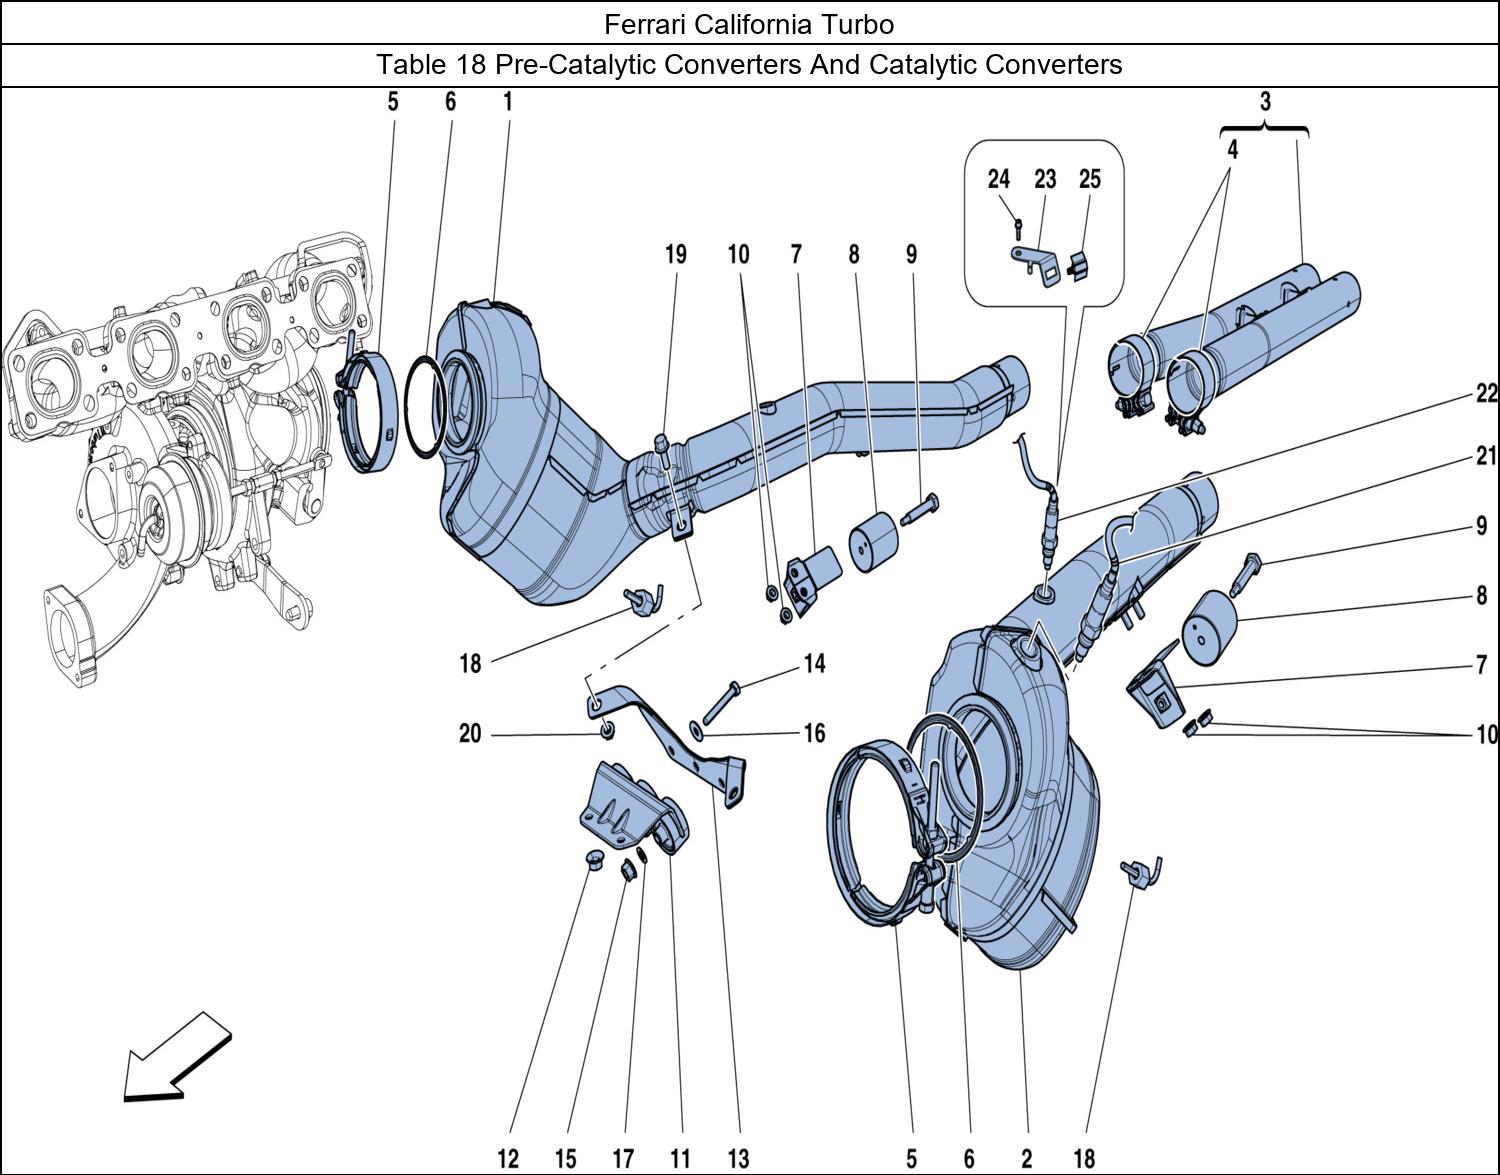 Ferrari Parts Ferrari California Turbo Table 18 Pre-Catalytic Converters And Catalytic Converters